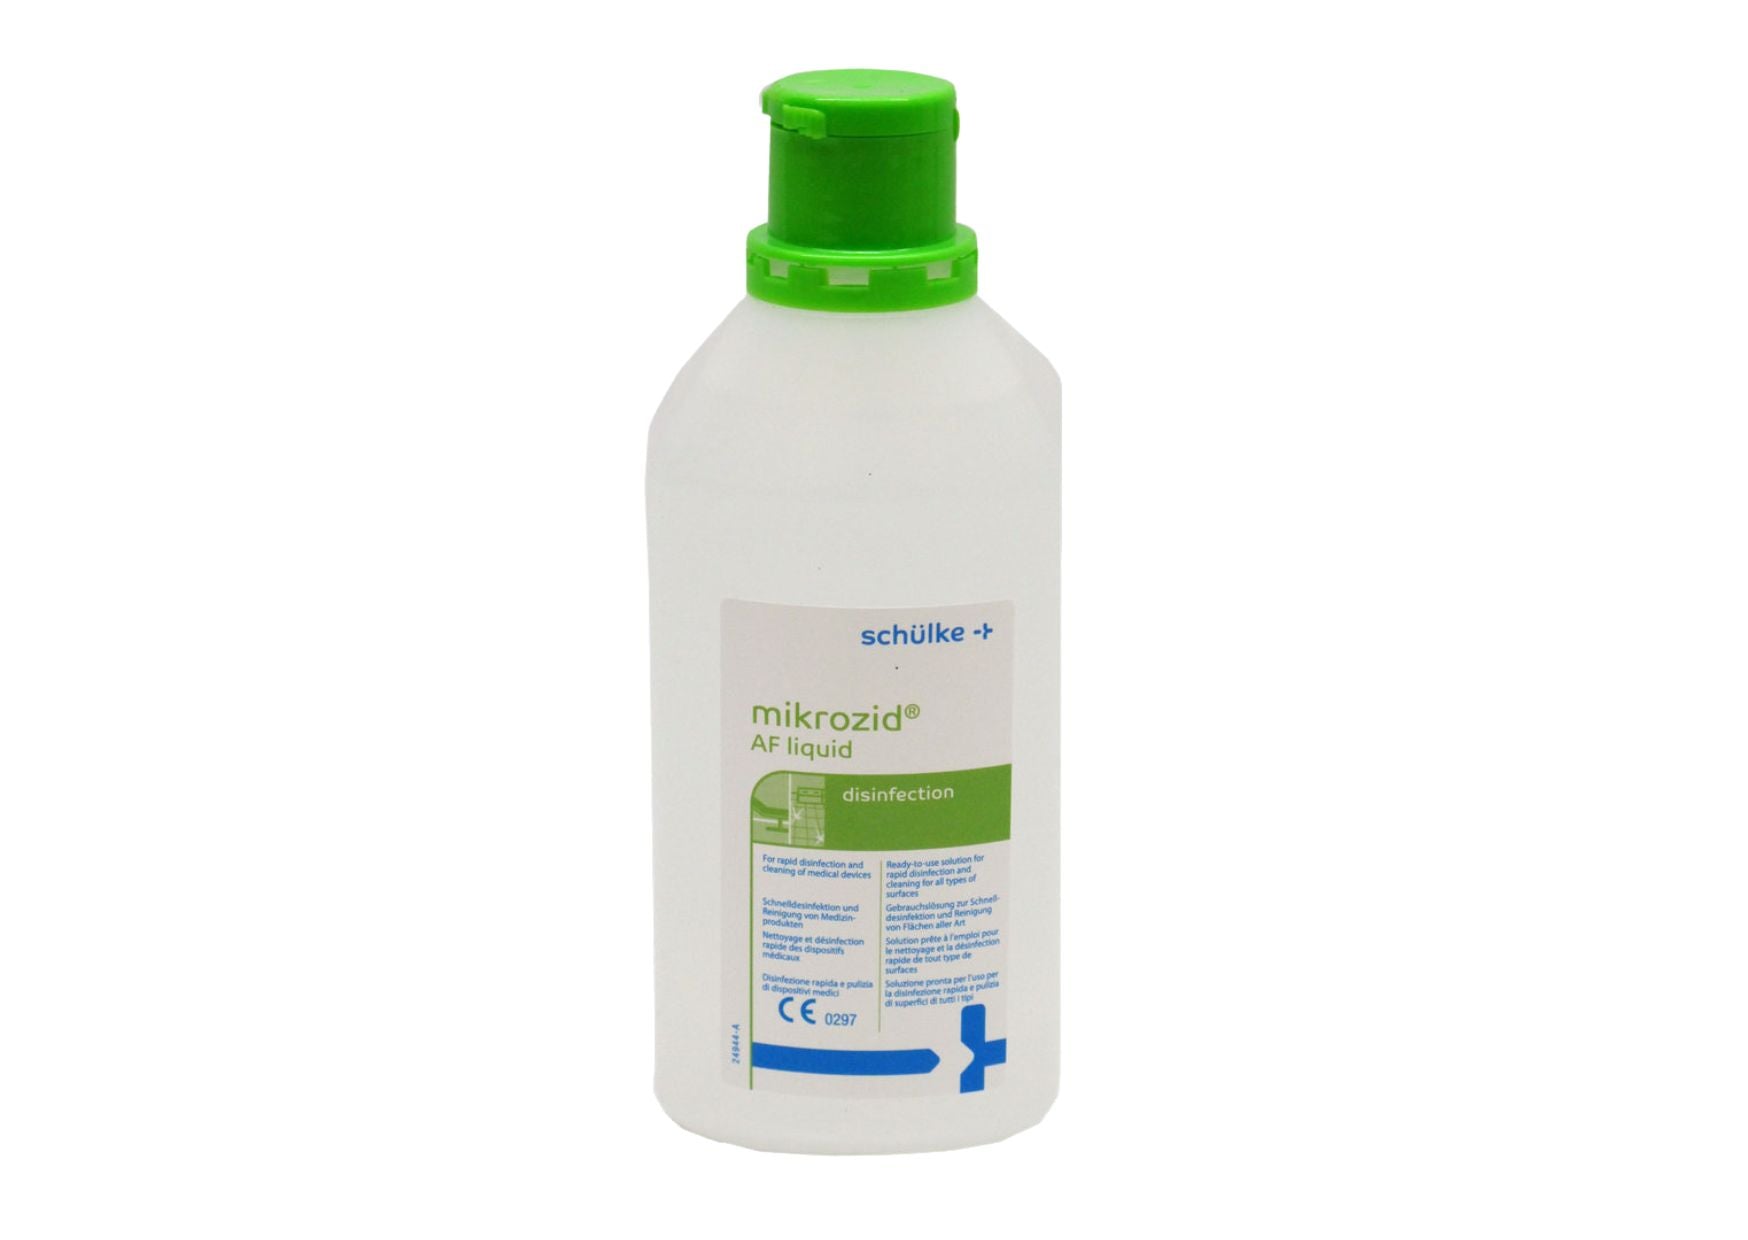 Schülke mikrozid AF liquid surface disinfection